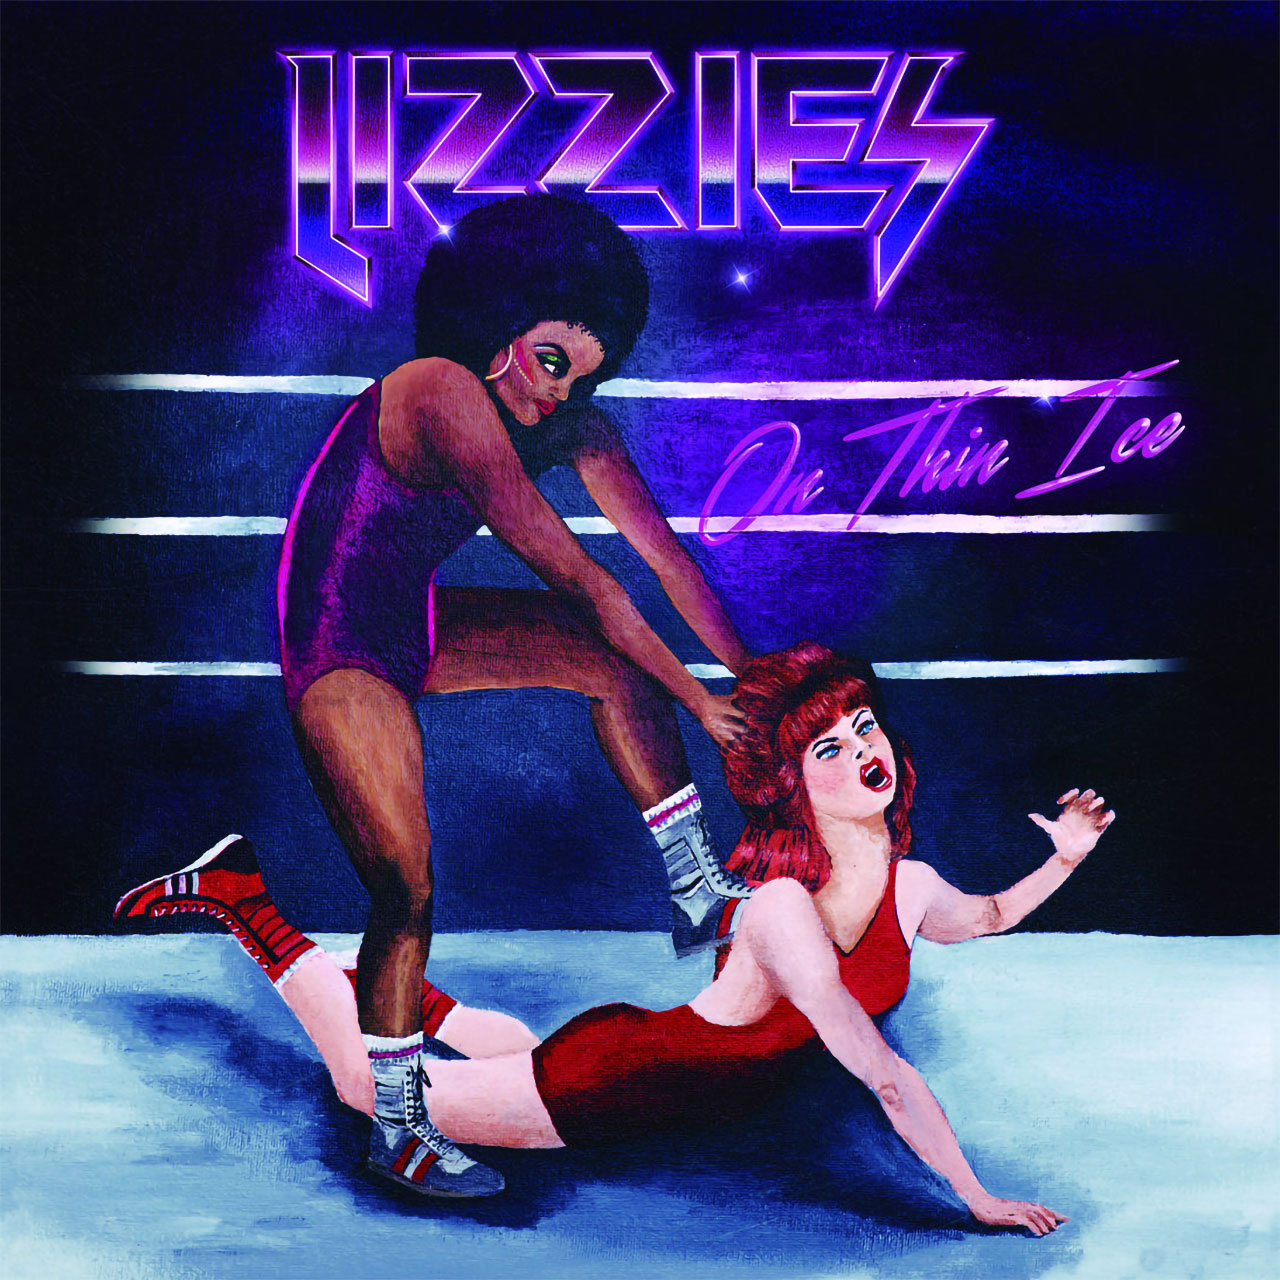 Lizzies - On Thin Ice (Digipak CD)